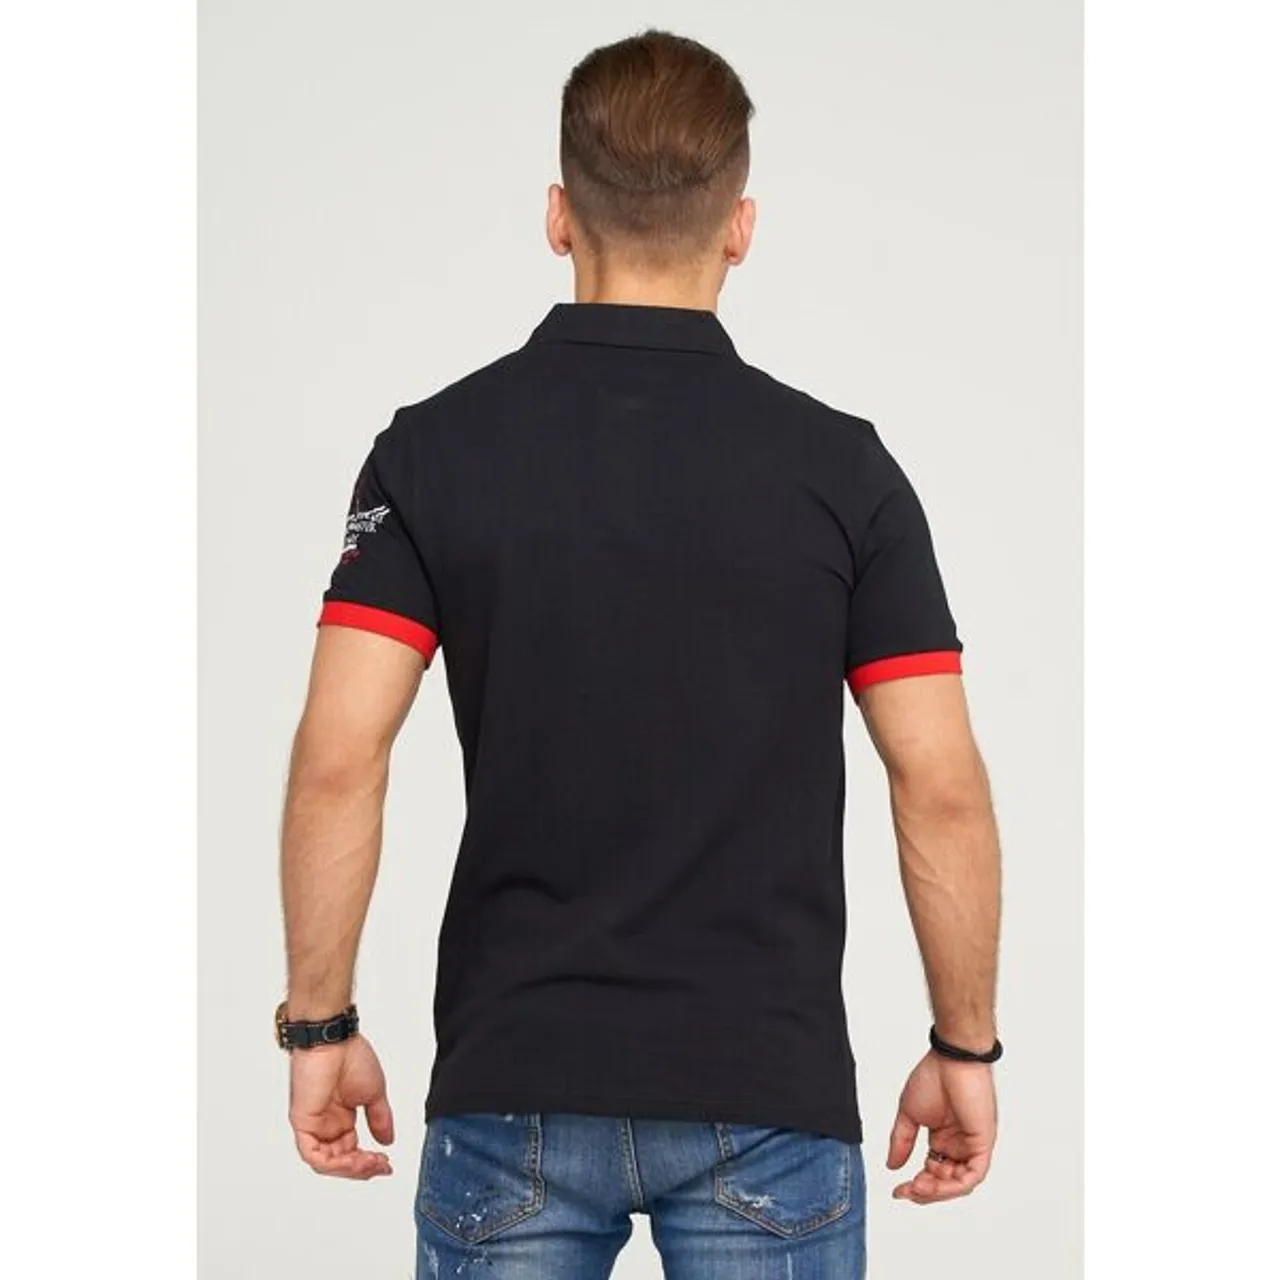 Poloshirt BEHYPE "LANAY" Gr. L, schwarz (schwarz, rot) Herren Shirts Kurzarm mit sportiver Stickerei